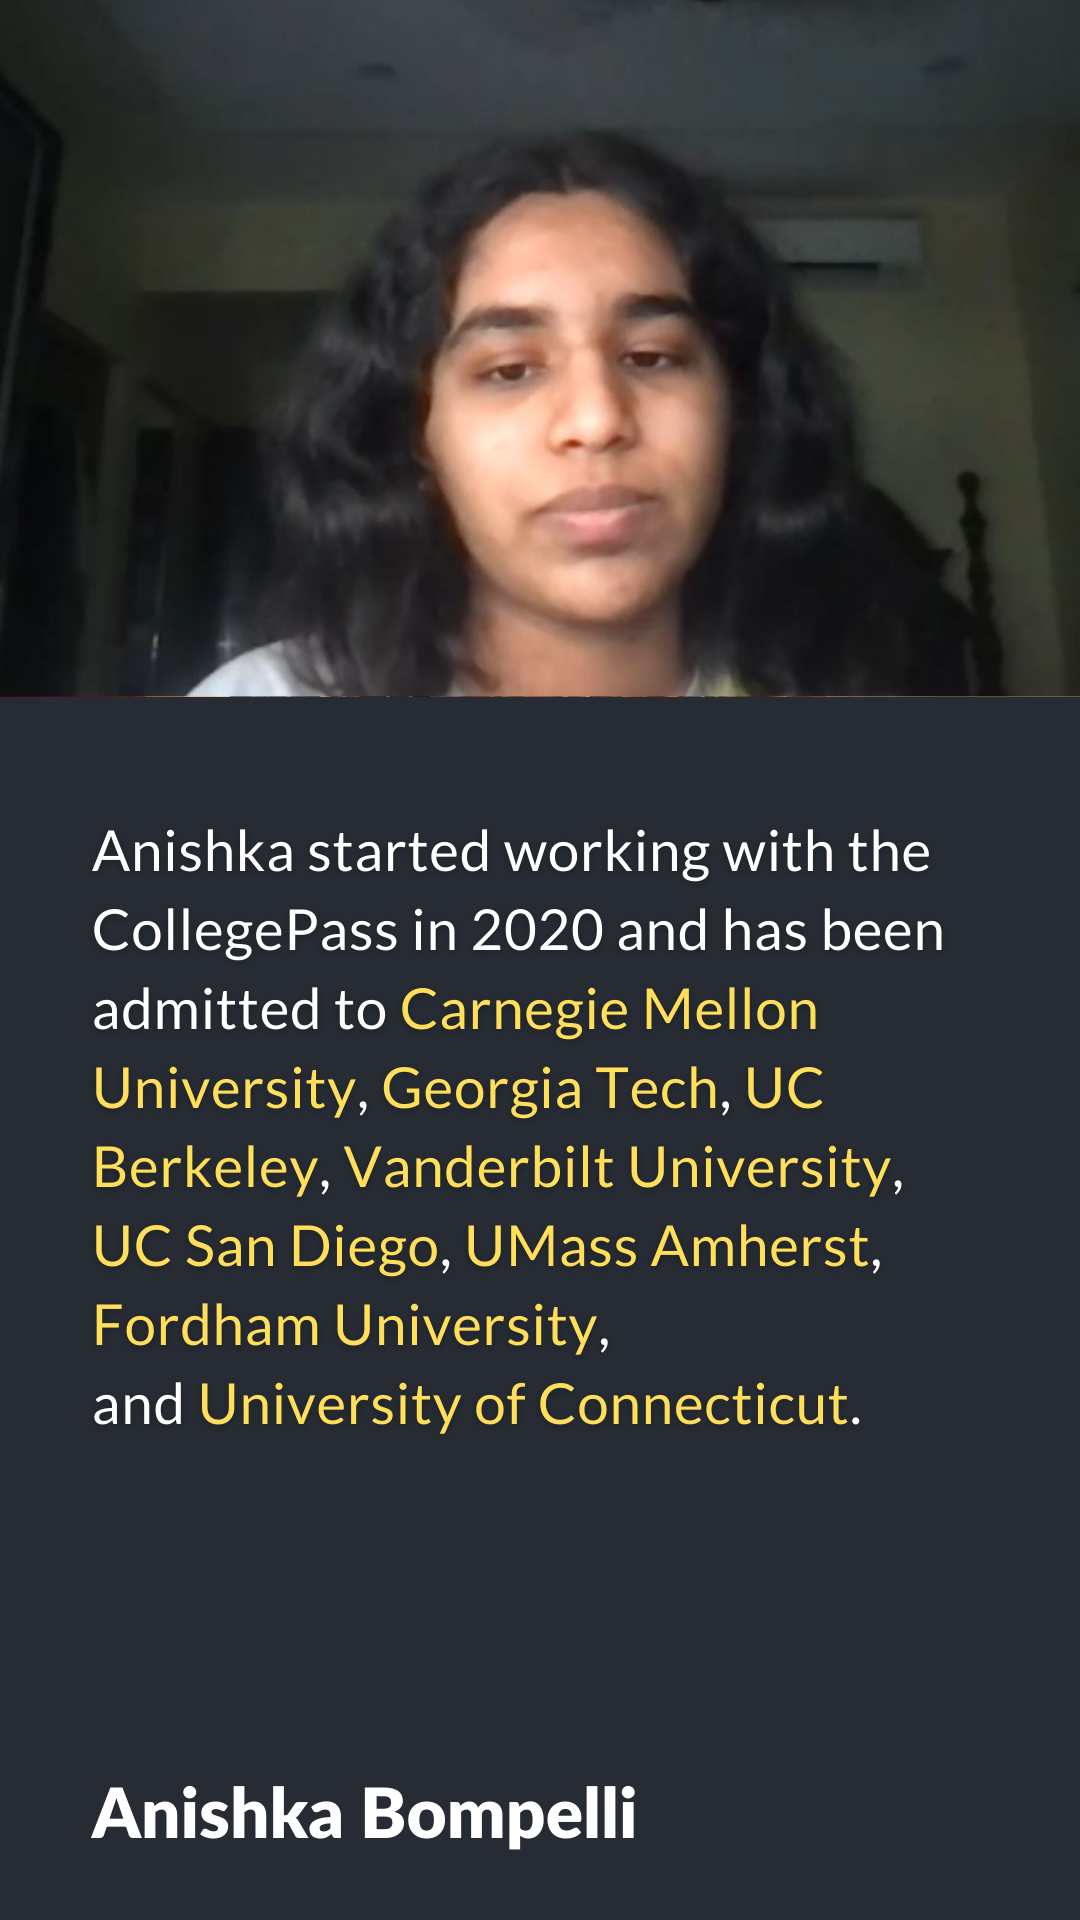 Anishka has been admitted to Carnegie Mellon, Georgia Tech, UC Berkeley, UC San Diego, etc.